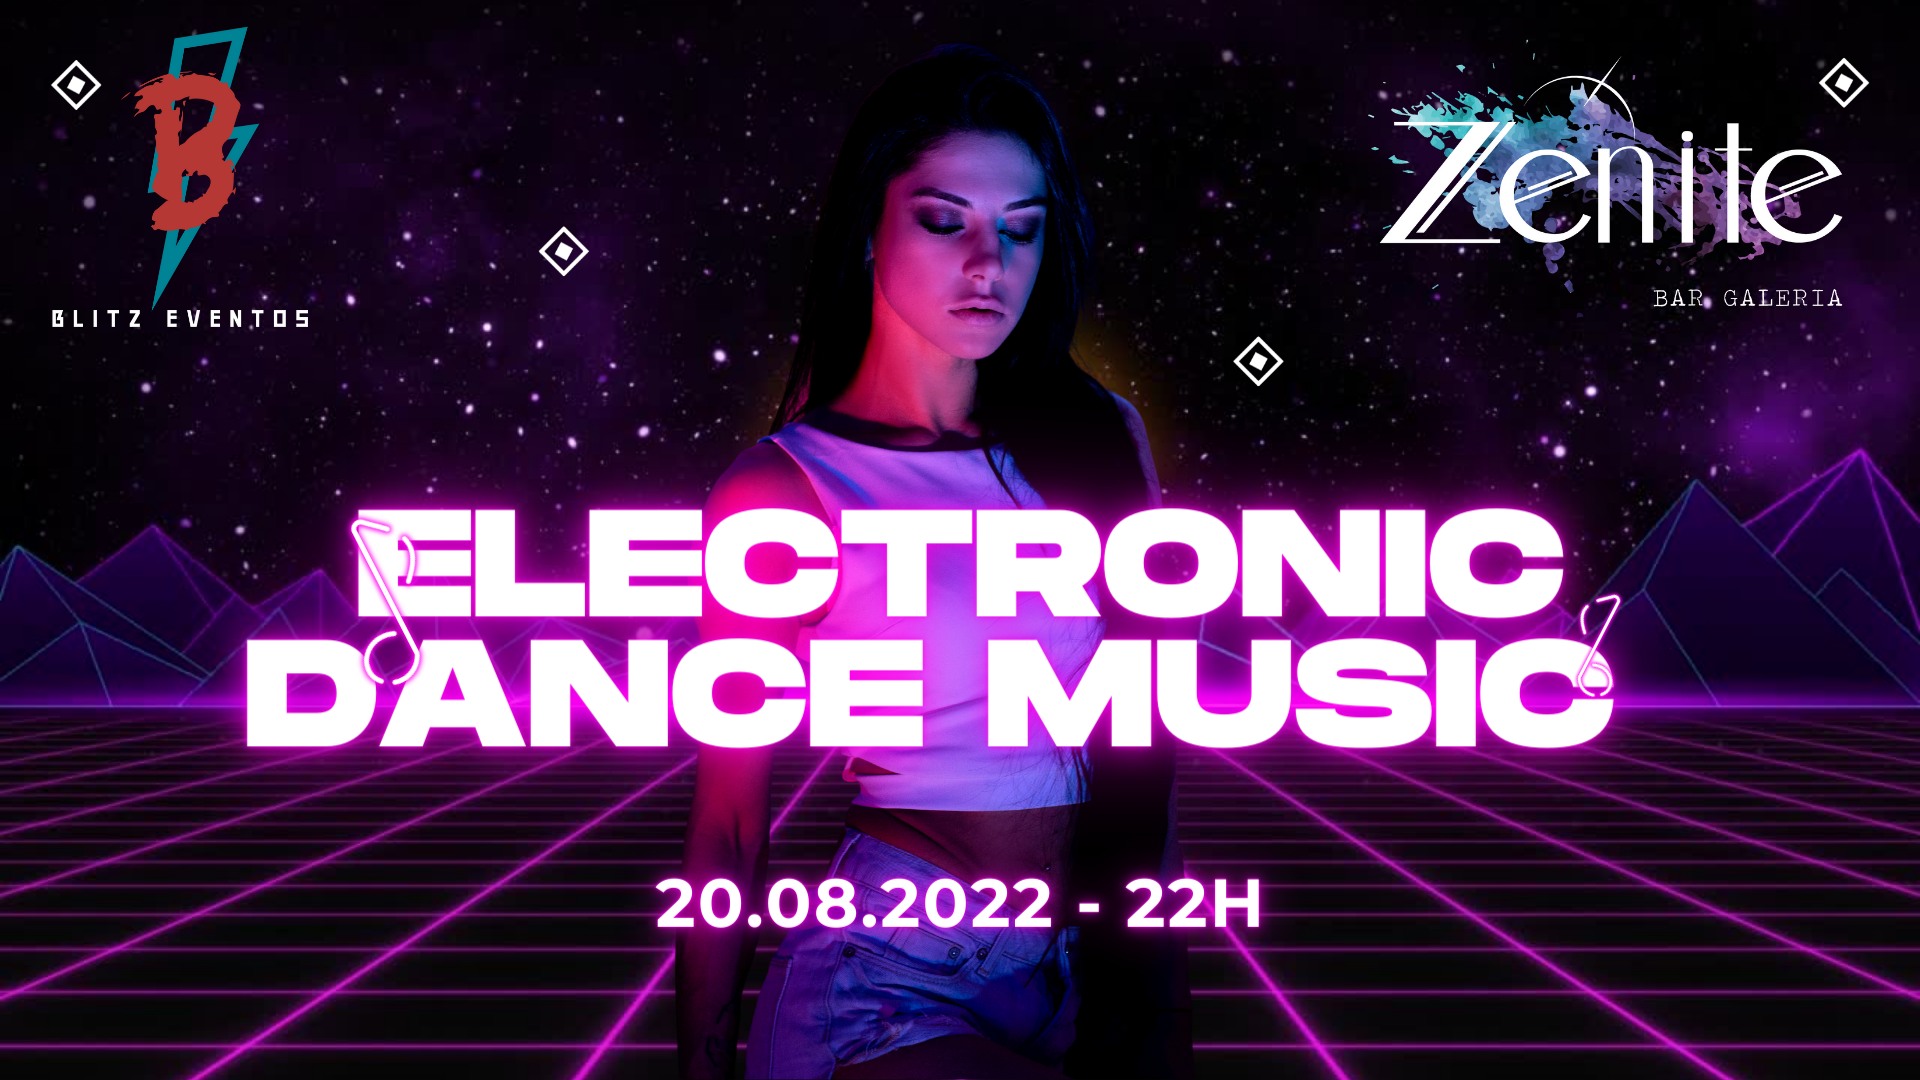 Electronic Dance Music - Zénite Bar Galeria